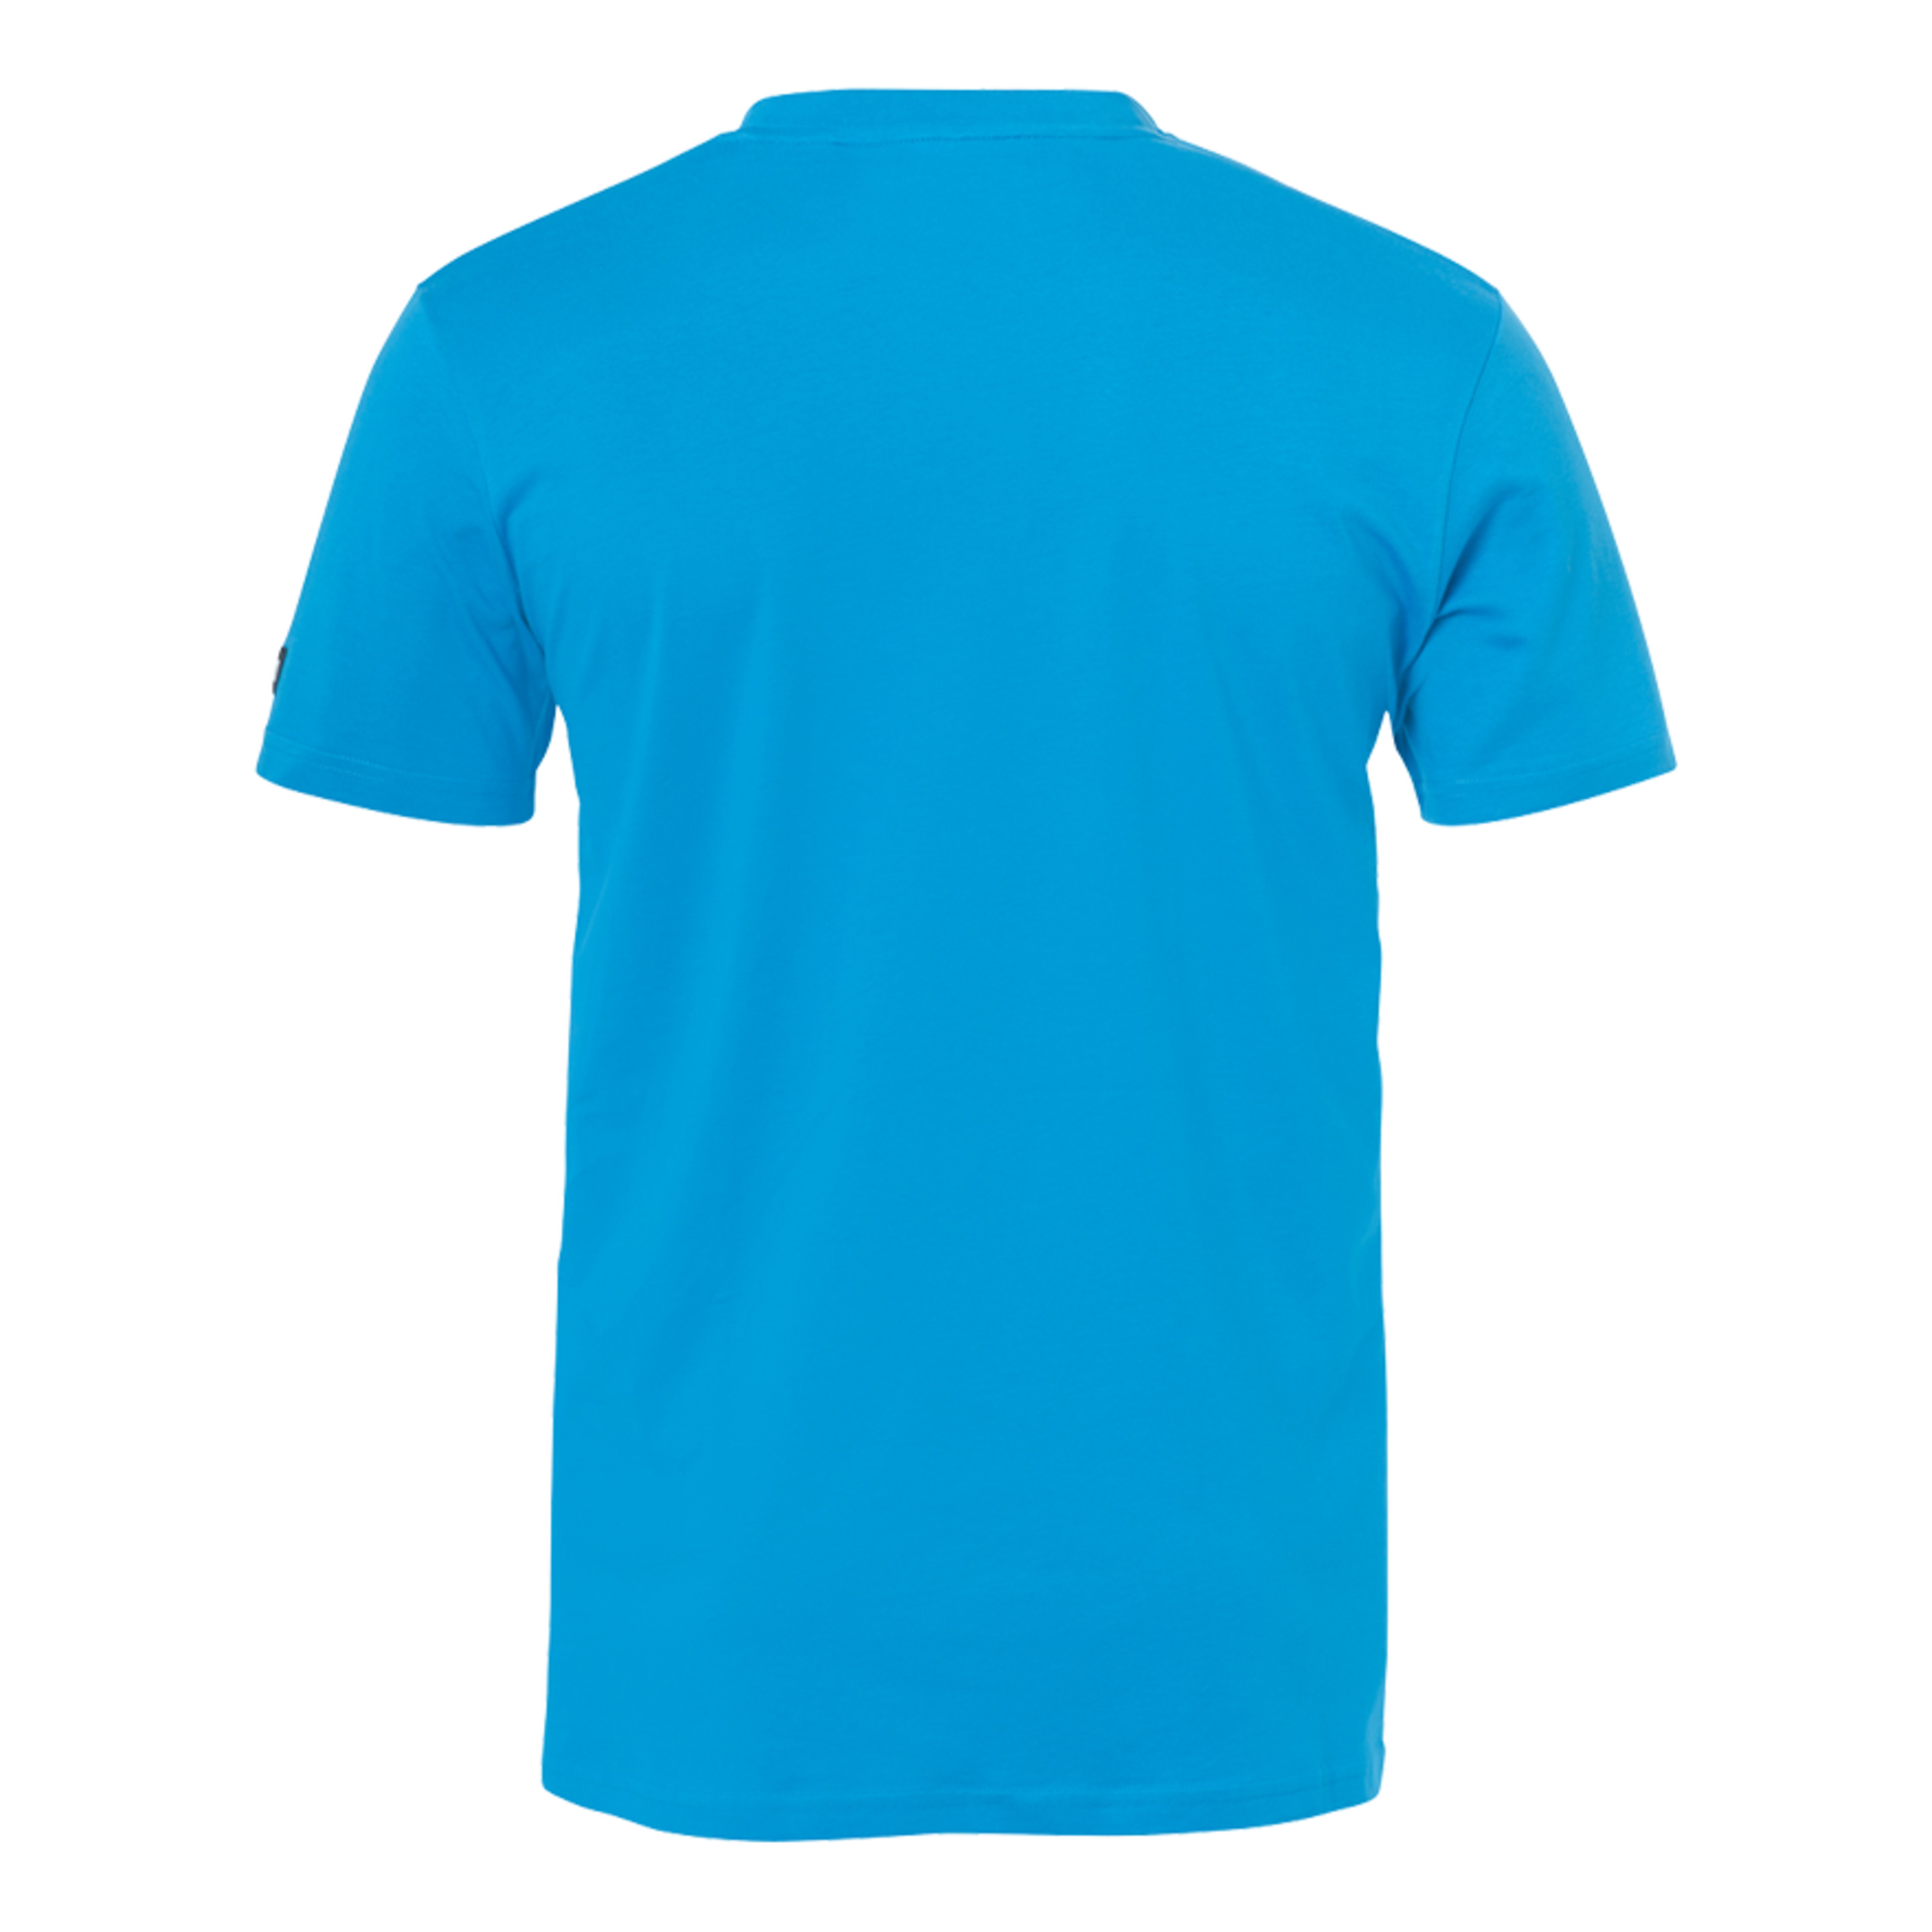 Promo Camiseta Kempa Azul Kempa